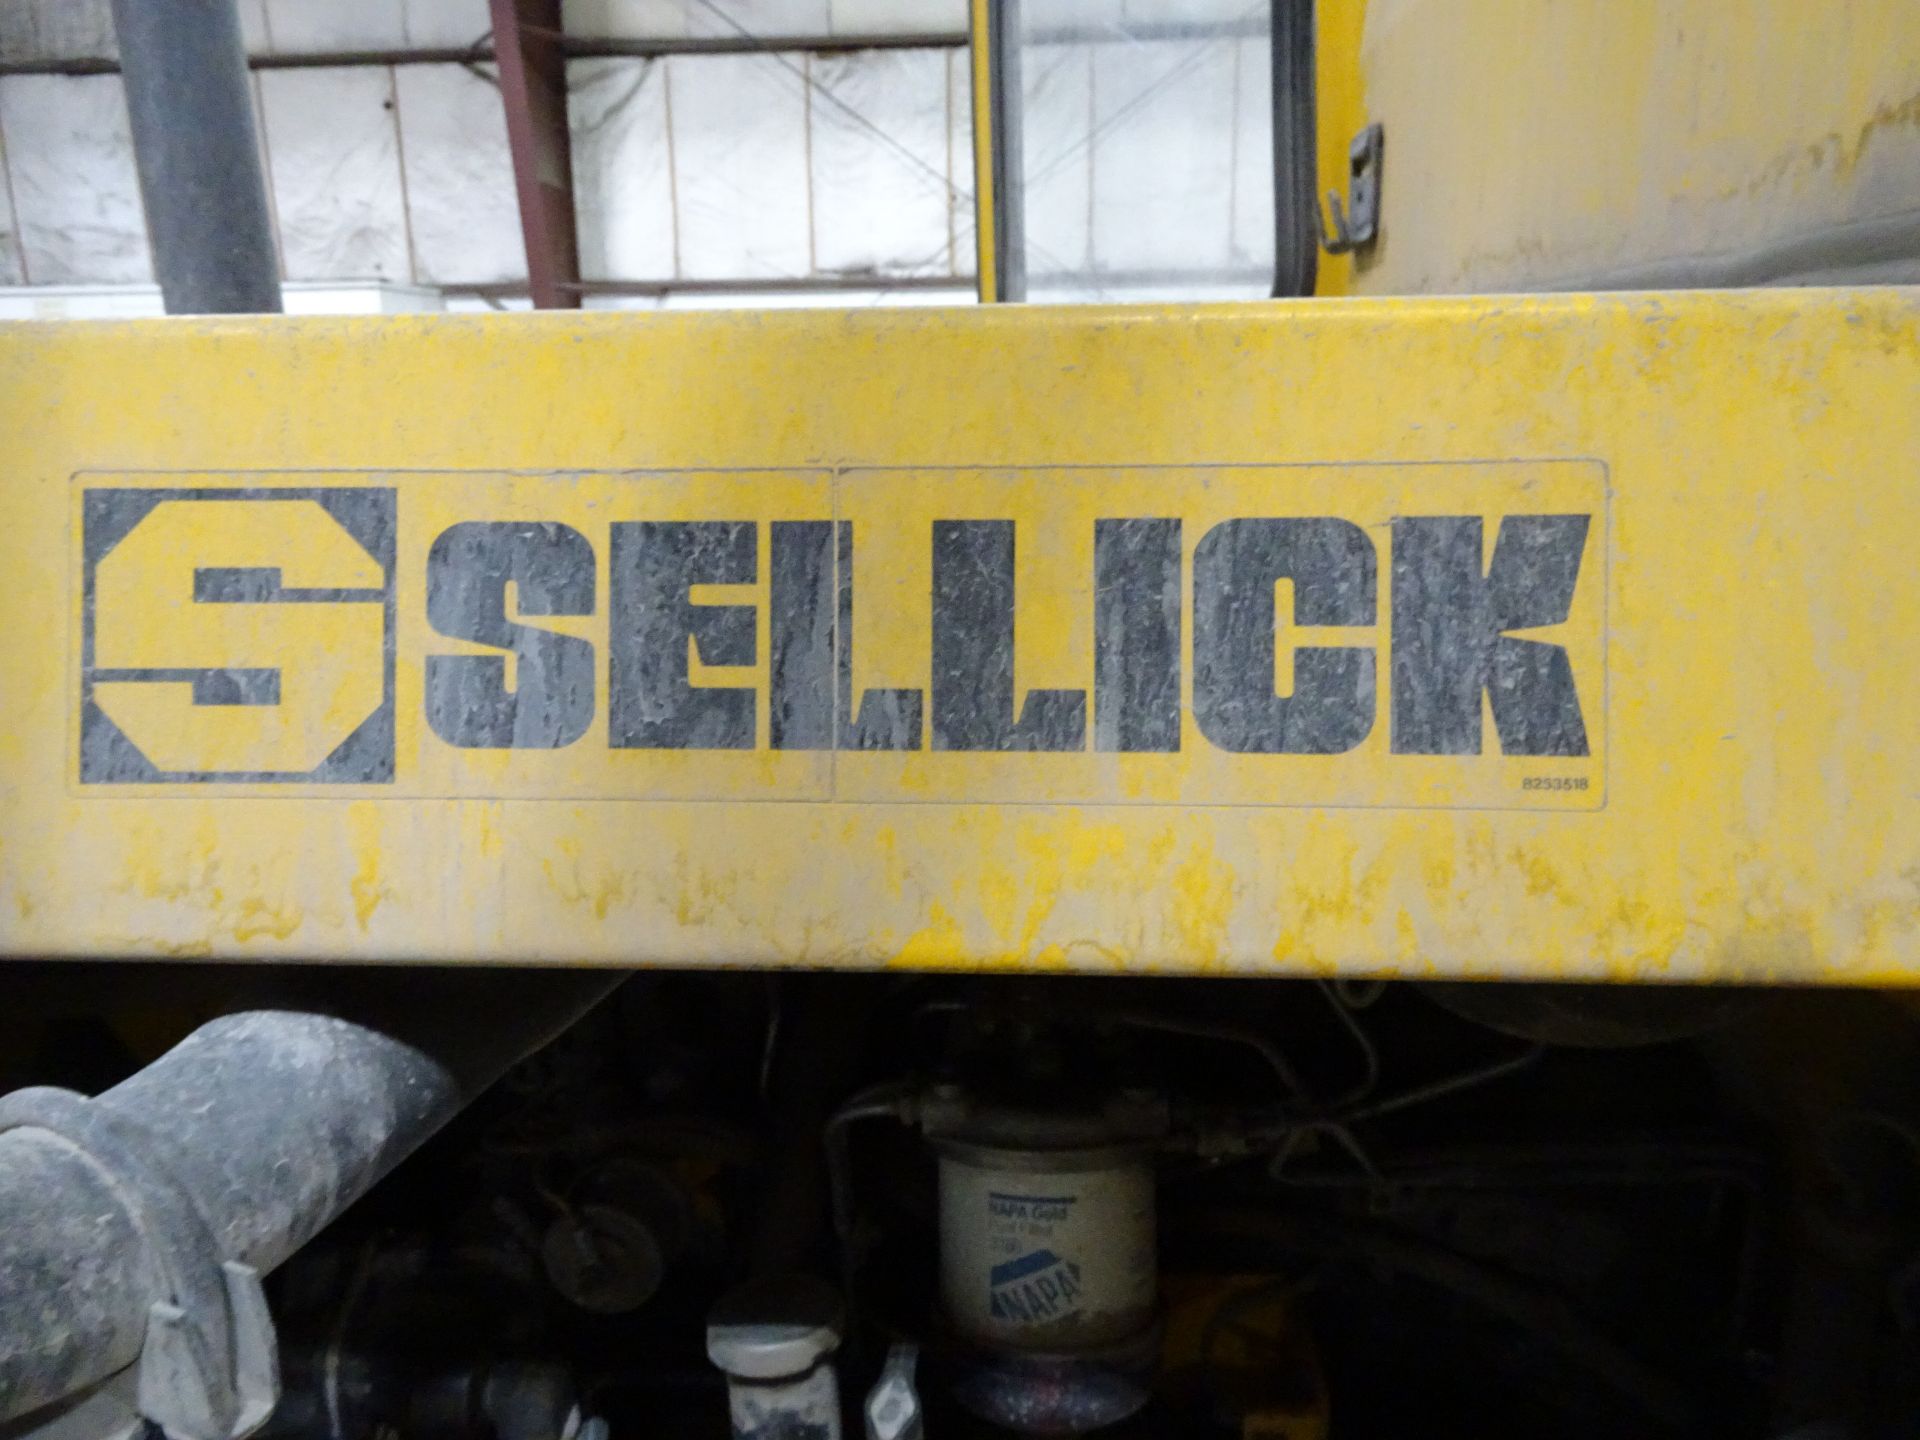 Sellick Model SD-80 8,000 lb Capacity Diesel Forklift - Image 4 of 4